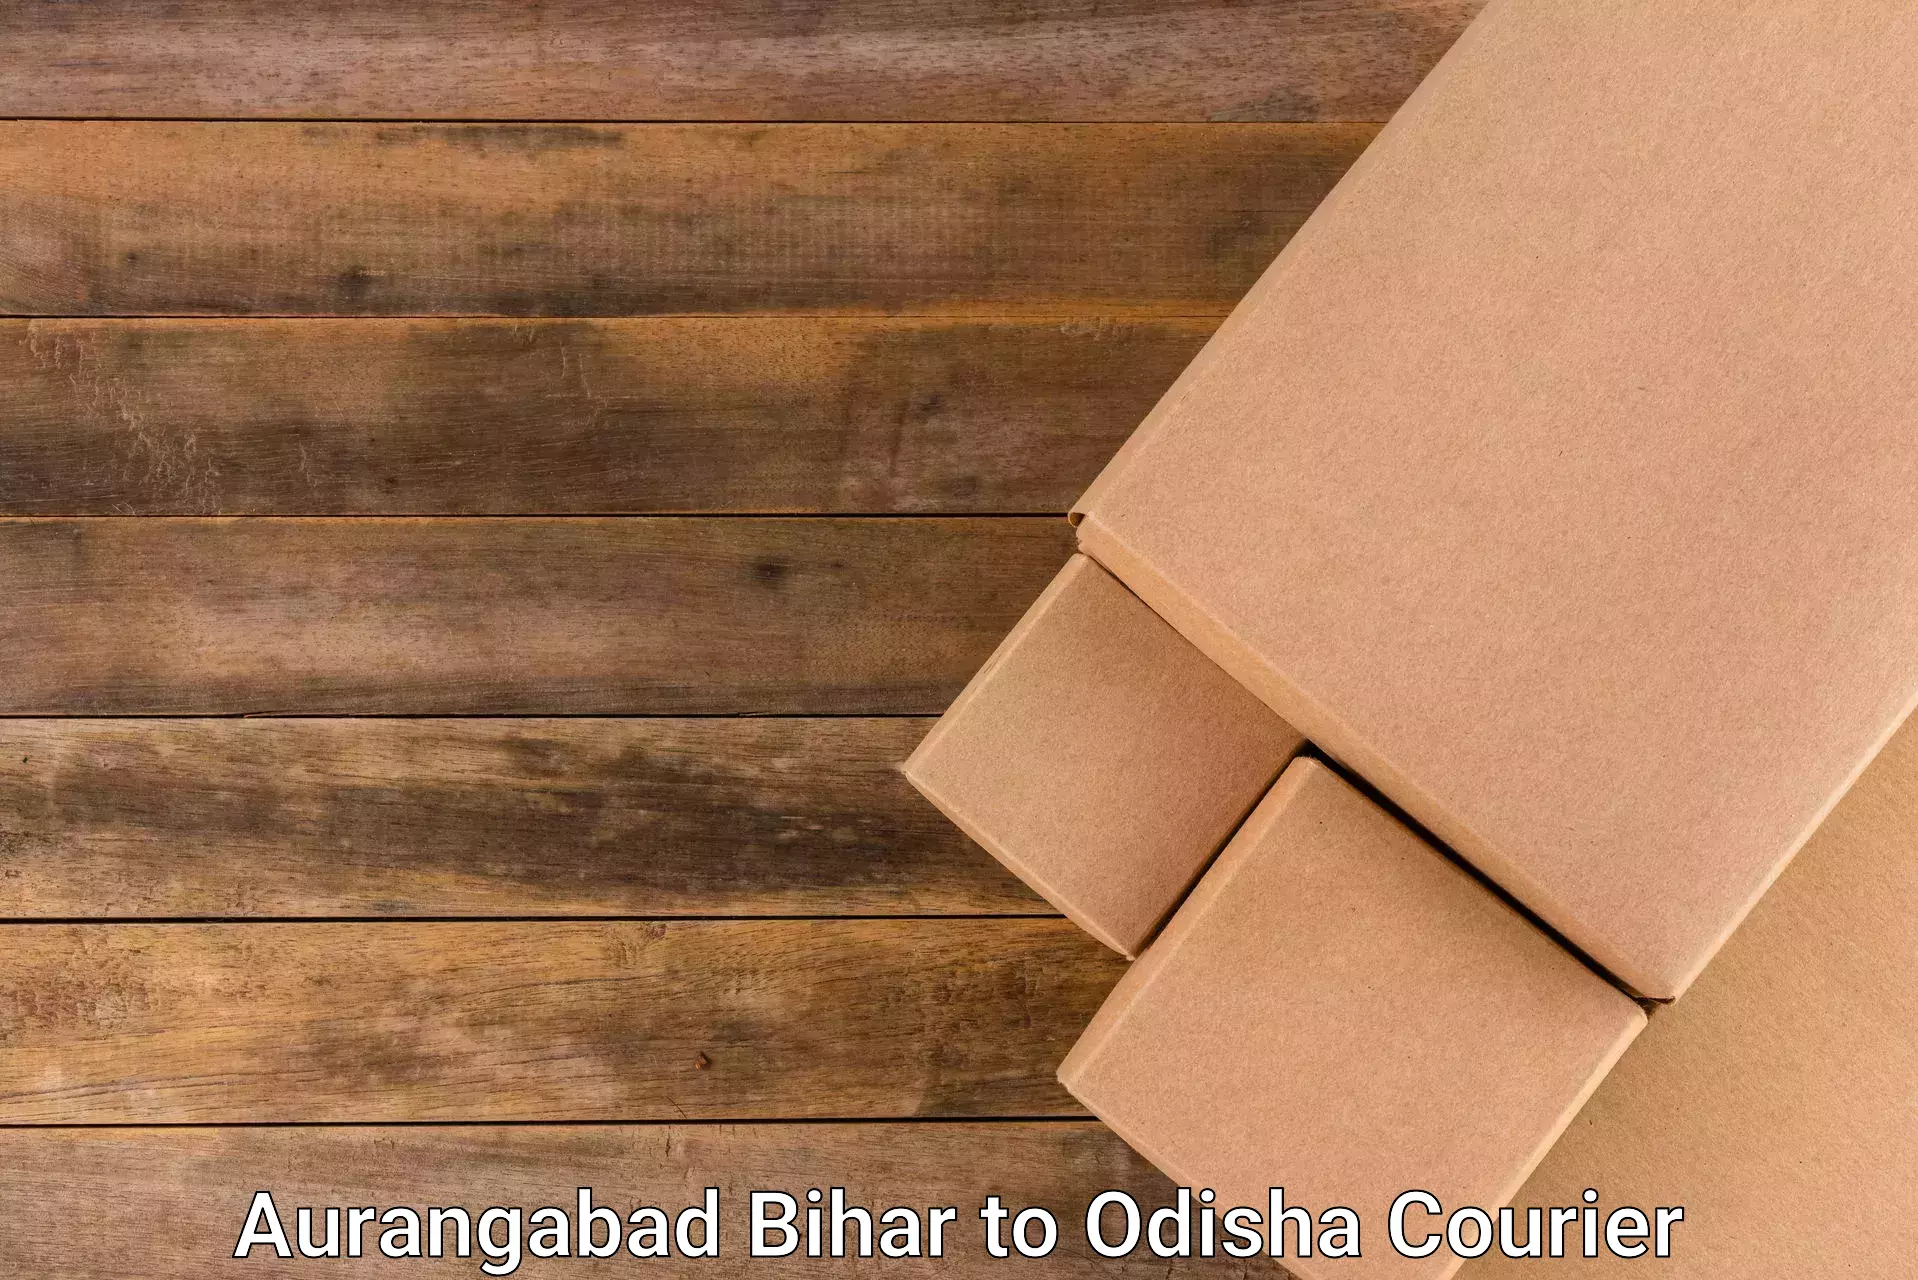 Next-generation courier services Aurangabad Bihar to Odisha